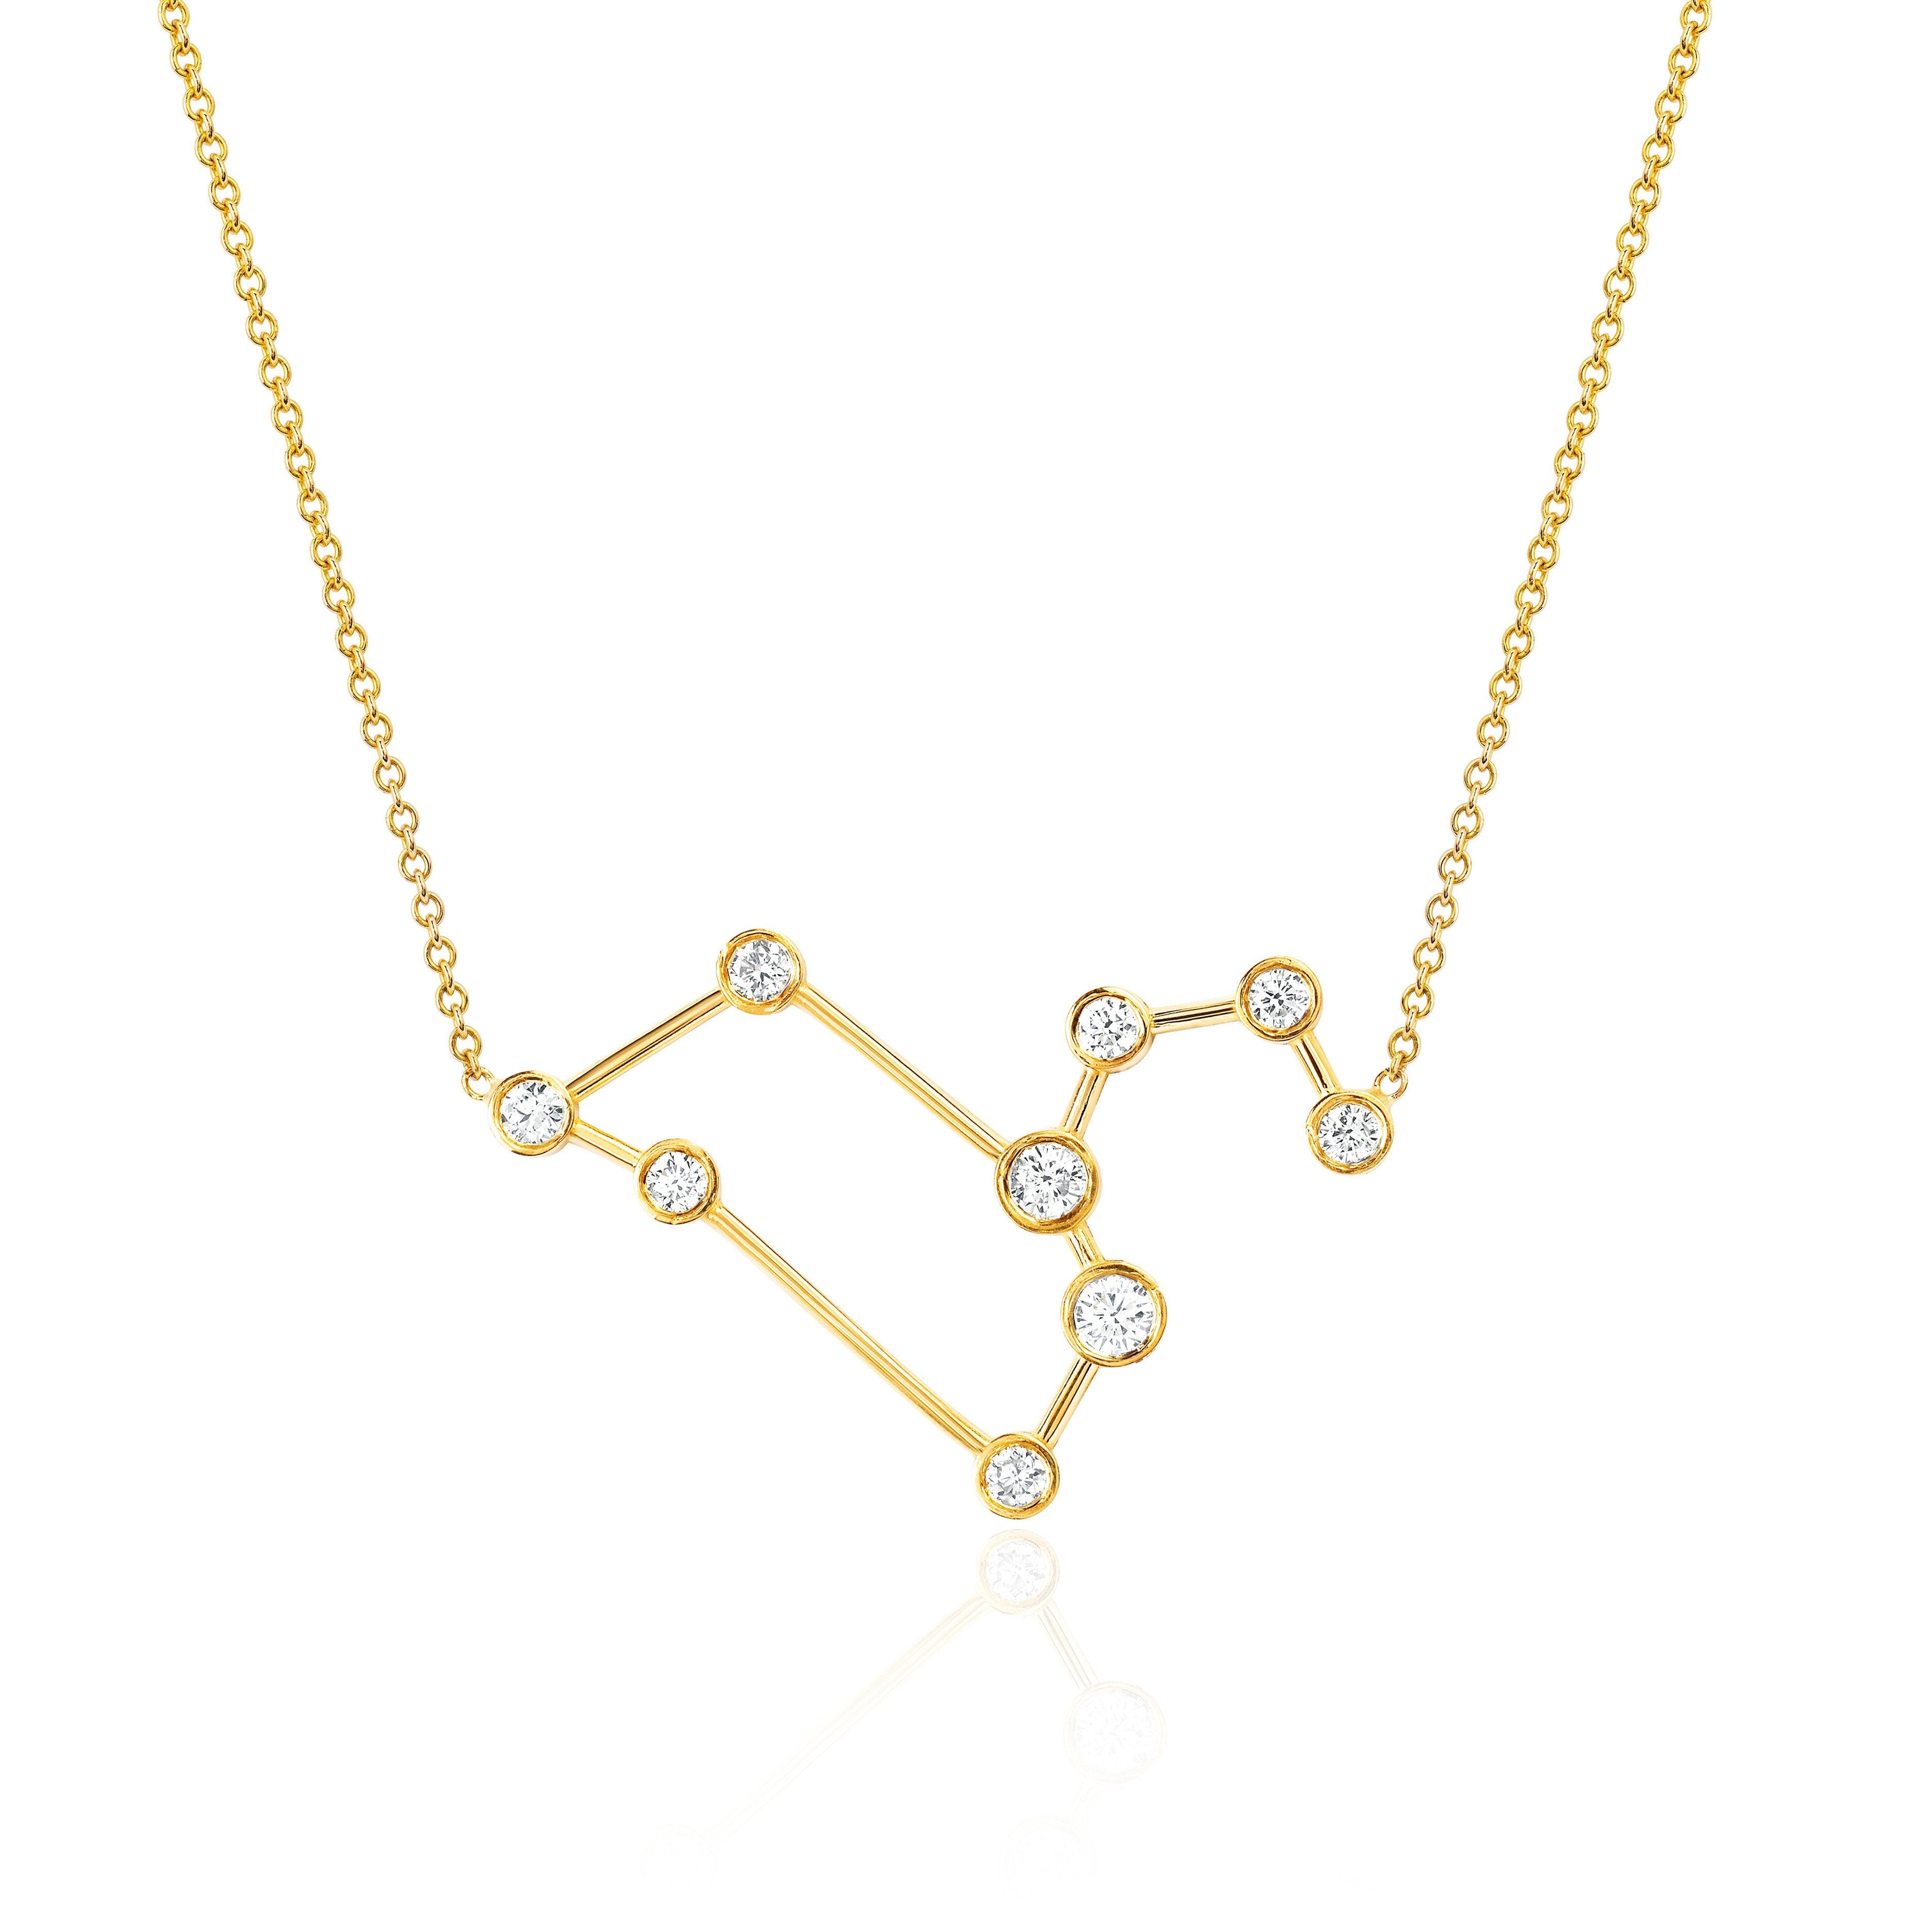 Leo Zodiac Sign Constellation Necklace | Constellation necklace, Zodiac  signs, Zodiac sign necklace